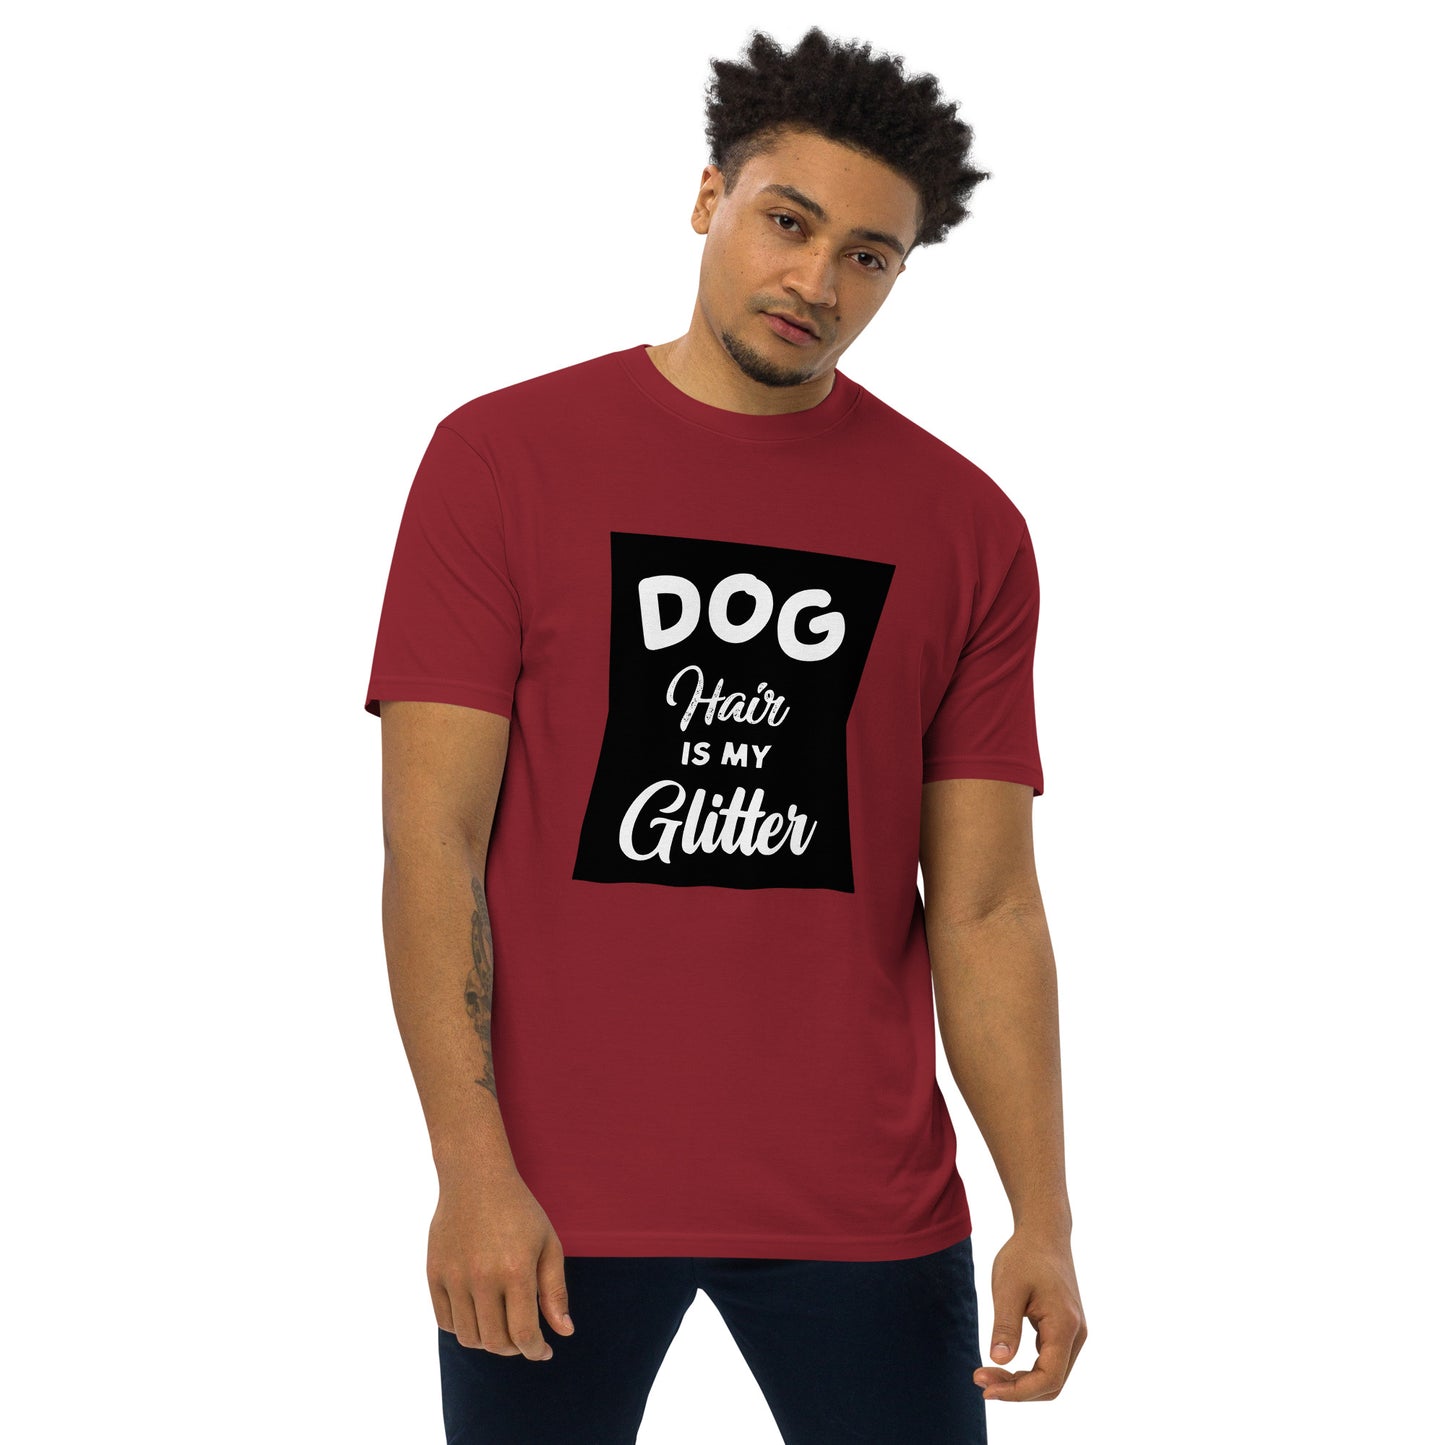 Dog Hair is my Glitter men's t-shirts